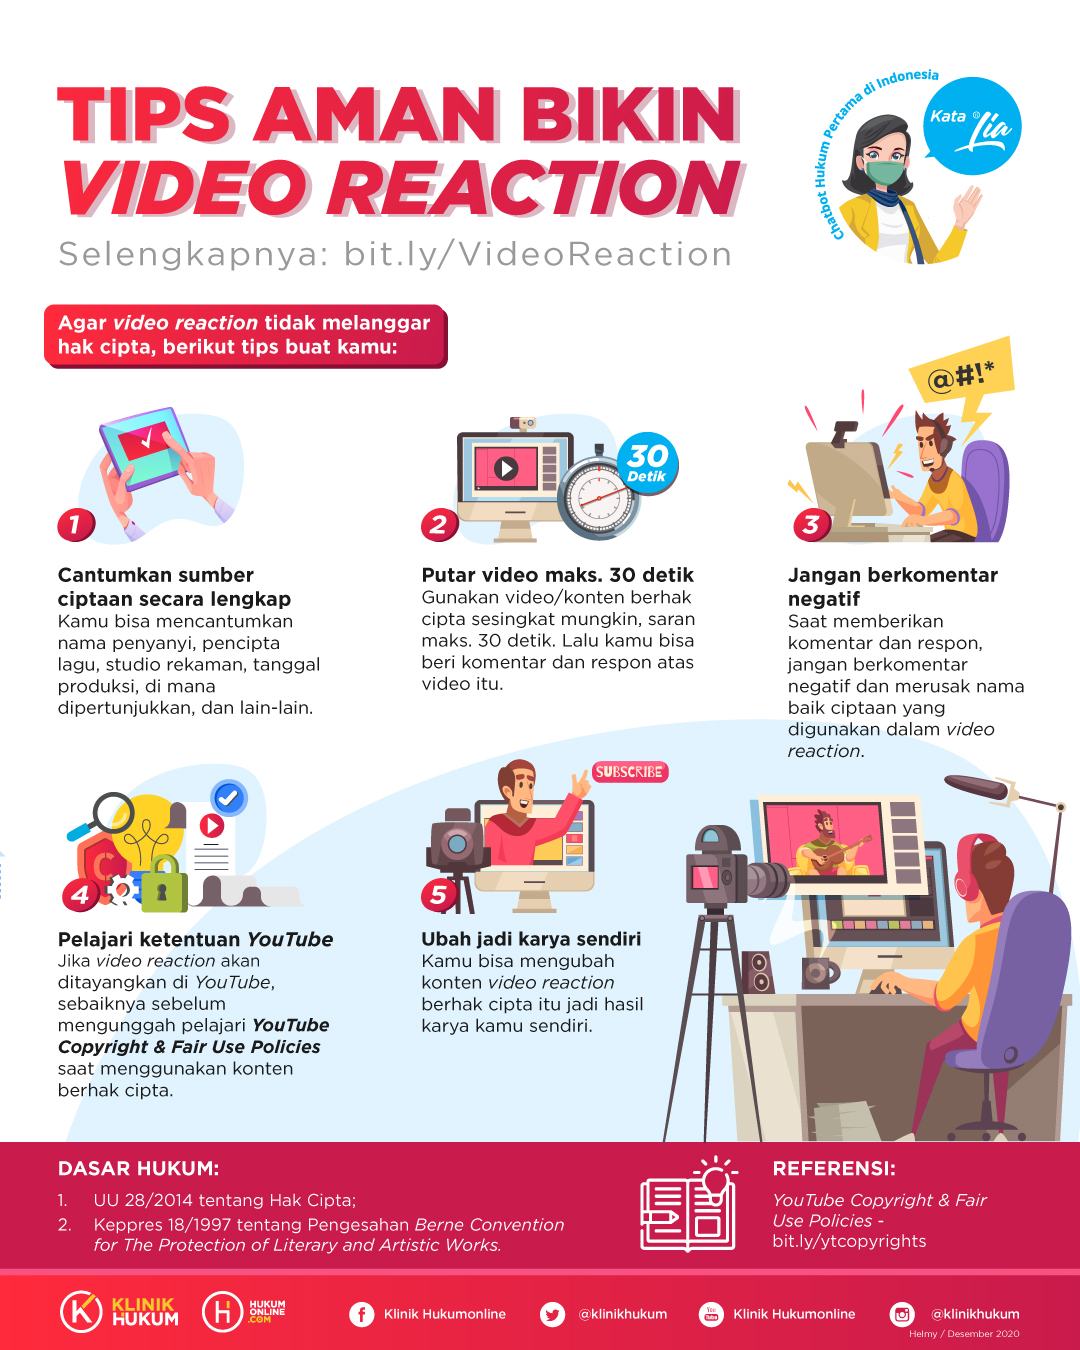 Tips Aman Bikin Video Reaction